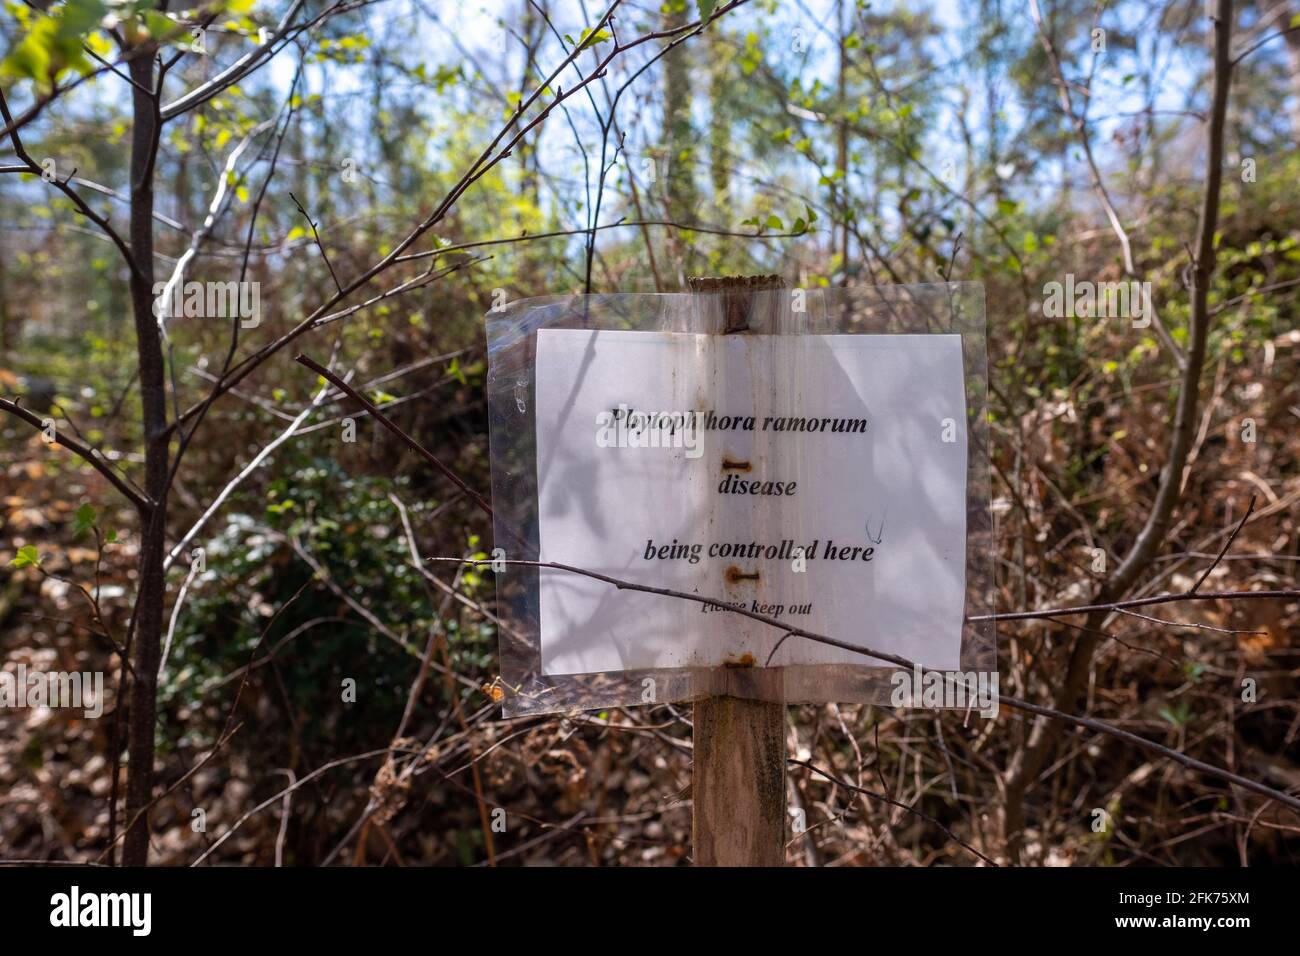 Surrey UK- April 2021: Phytophthora ramorum disease control sign in Surrey Hills woodland Stock Photo